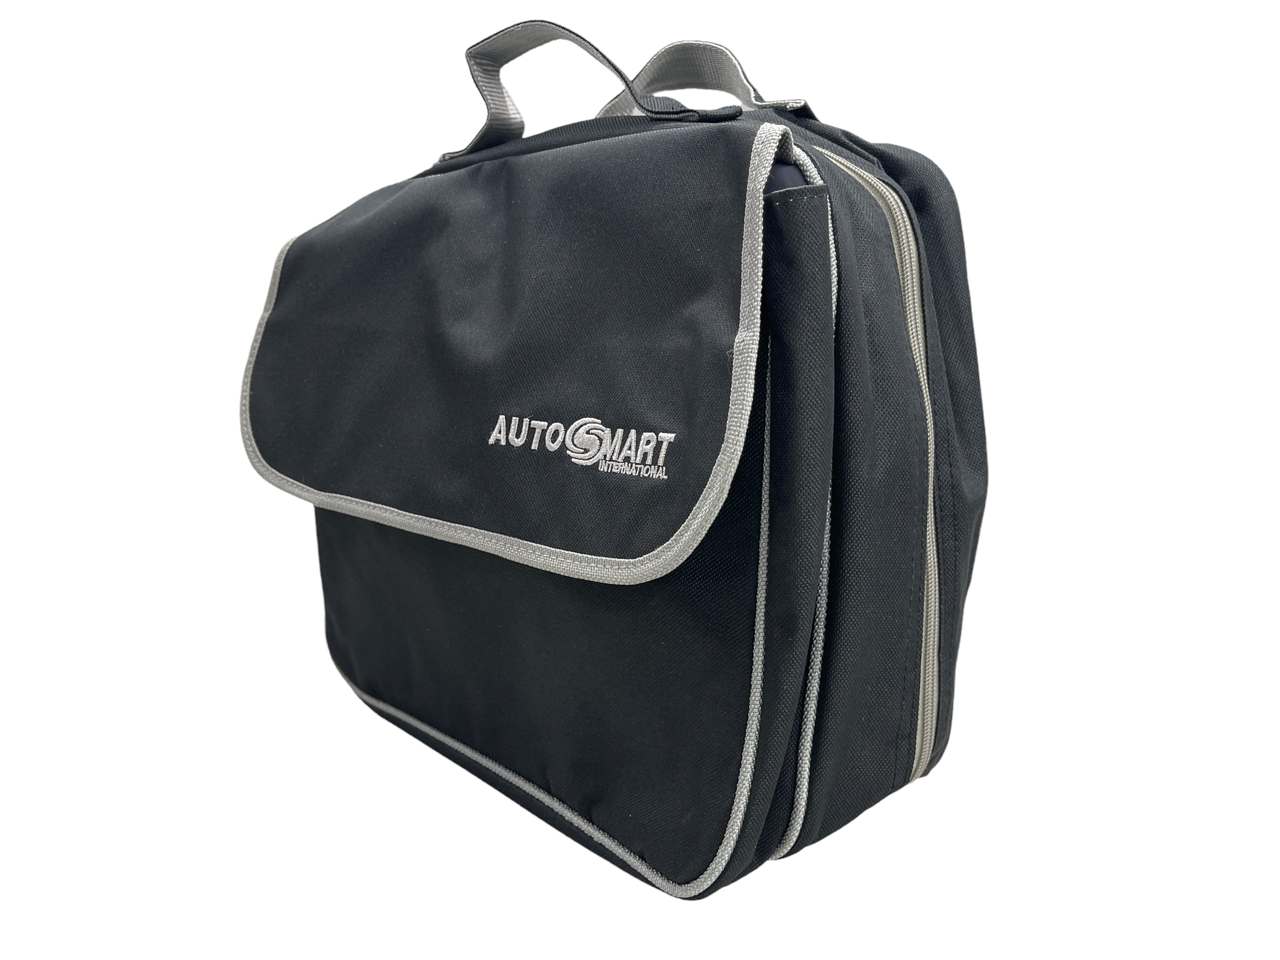 Autosmart Retail Bag - Bag only